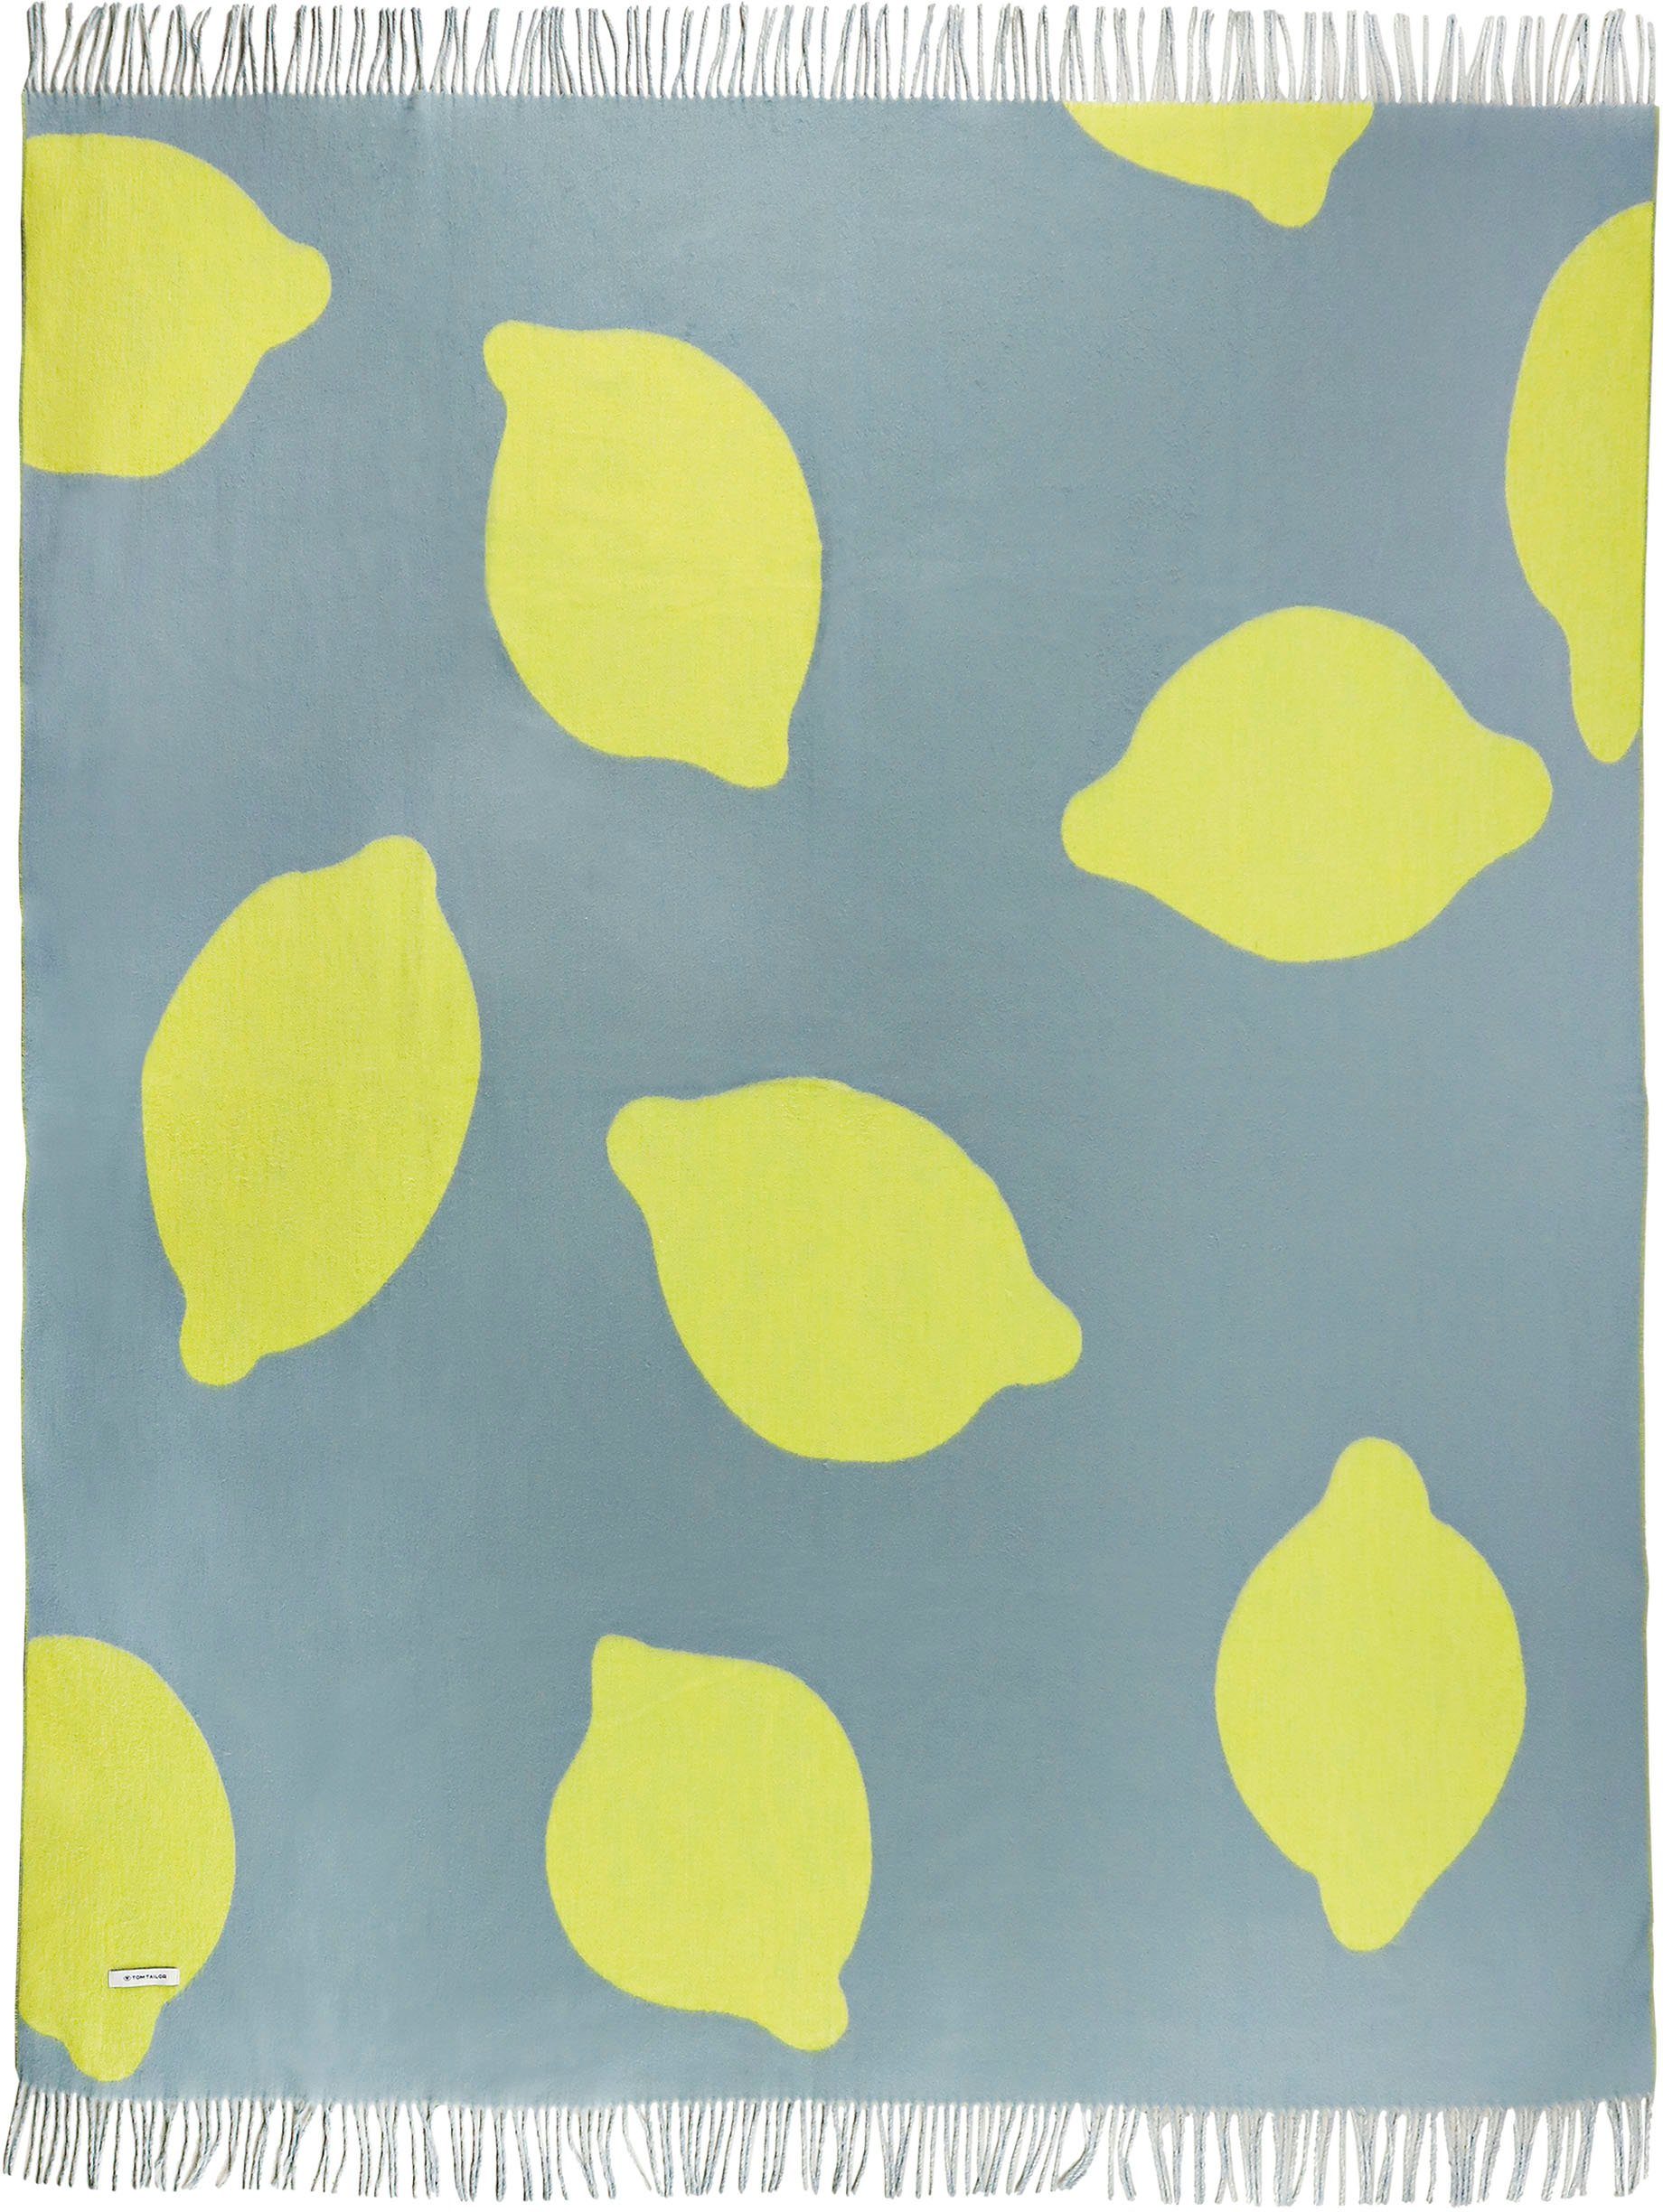 Plaid Lemon-Rain Künstlerkollektion HOME, TOM Bings, TAILOR